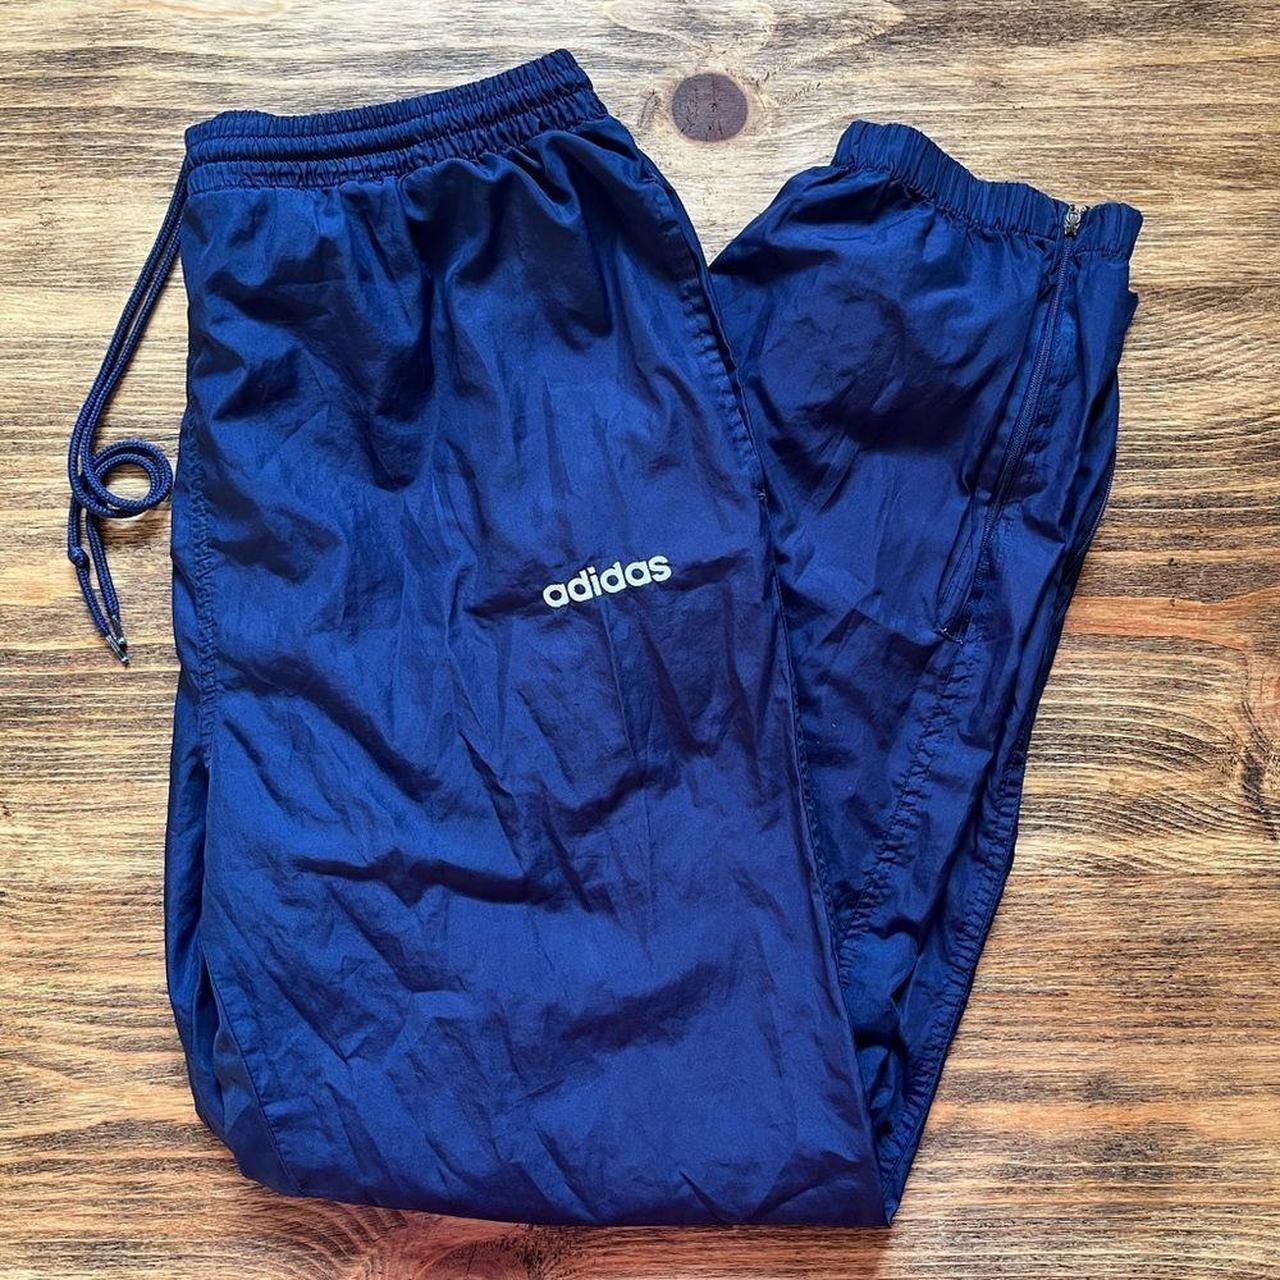 Product Image 1 - Item: Adidas Vintage Sweatpants
Size: Medium